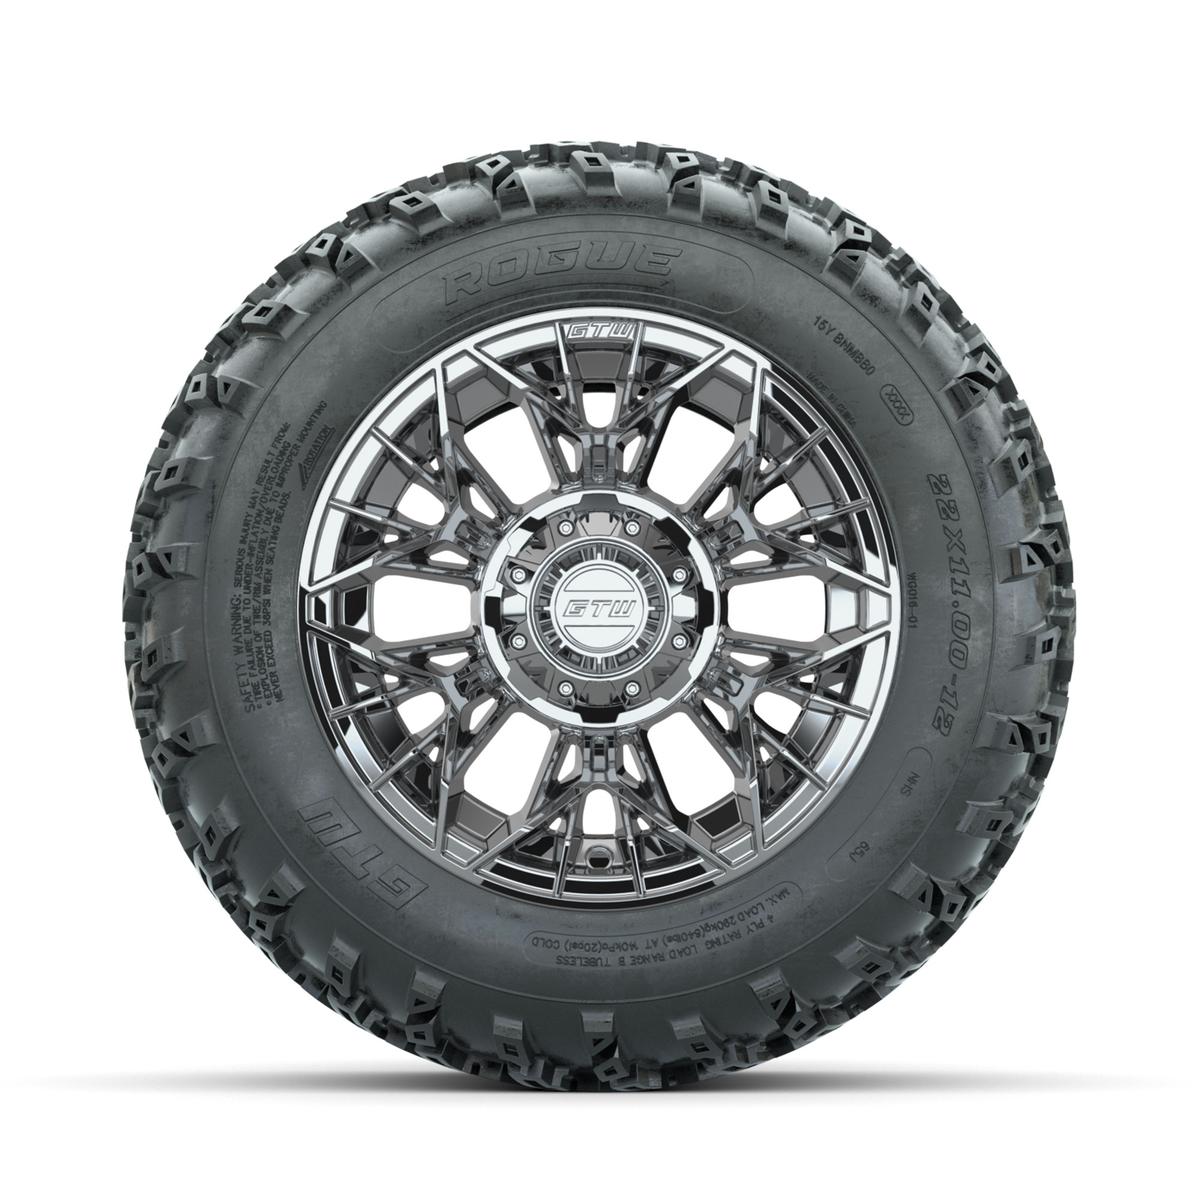 GTW Stellar Chrome 12 in Wheels with 22x11.00-12 Rogue All Terrain Tires – Full Set